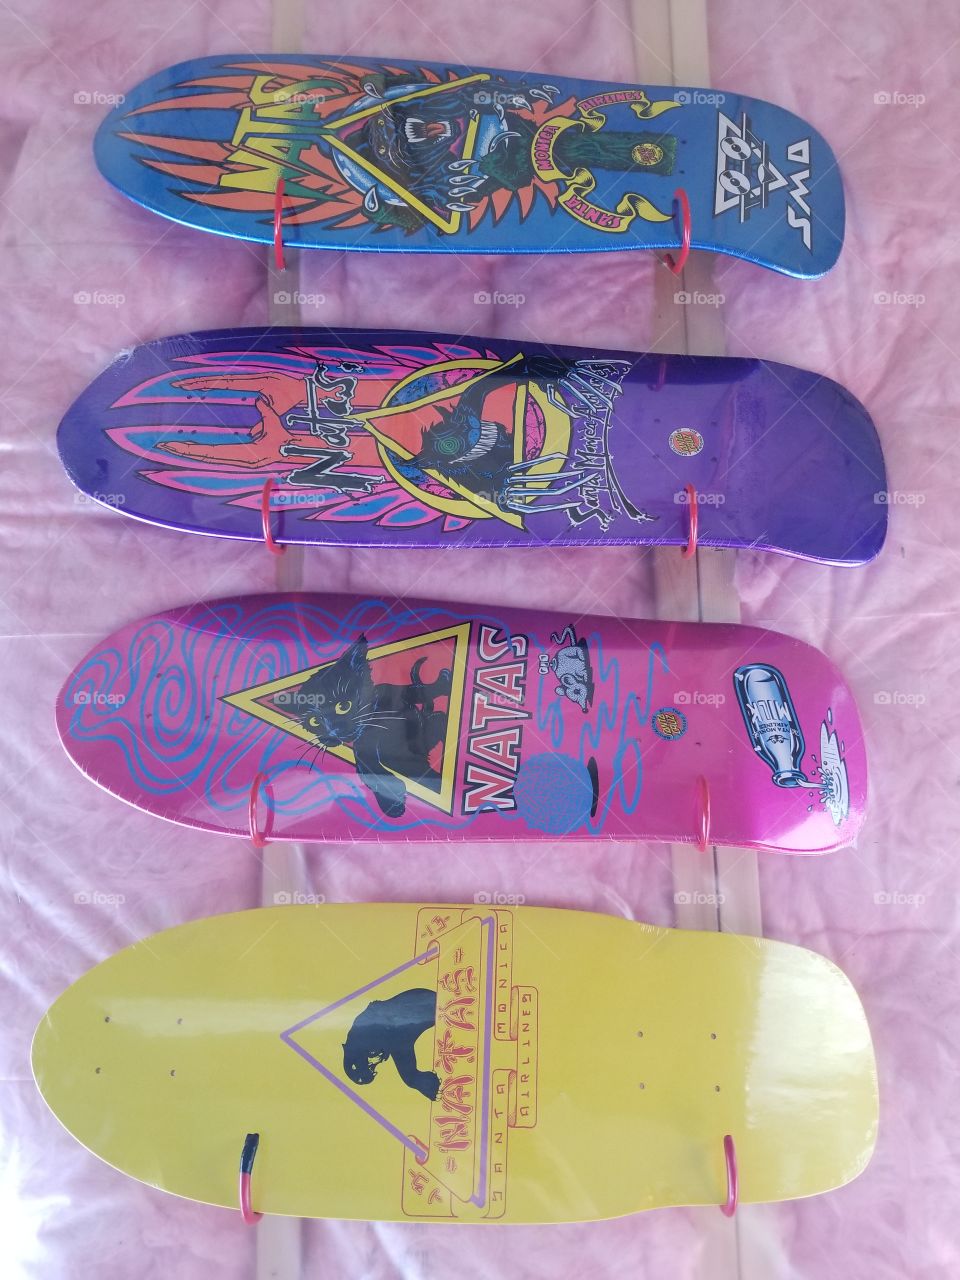 natas skateboards